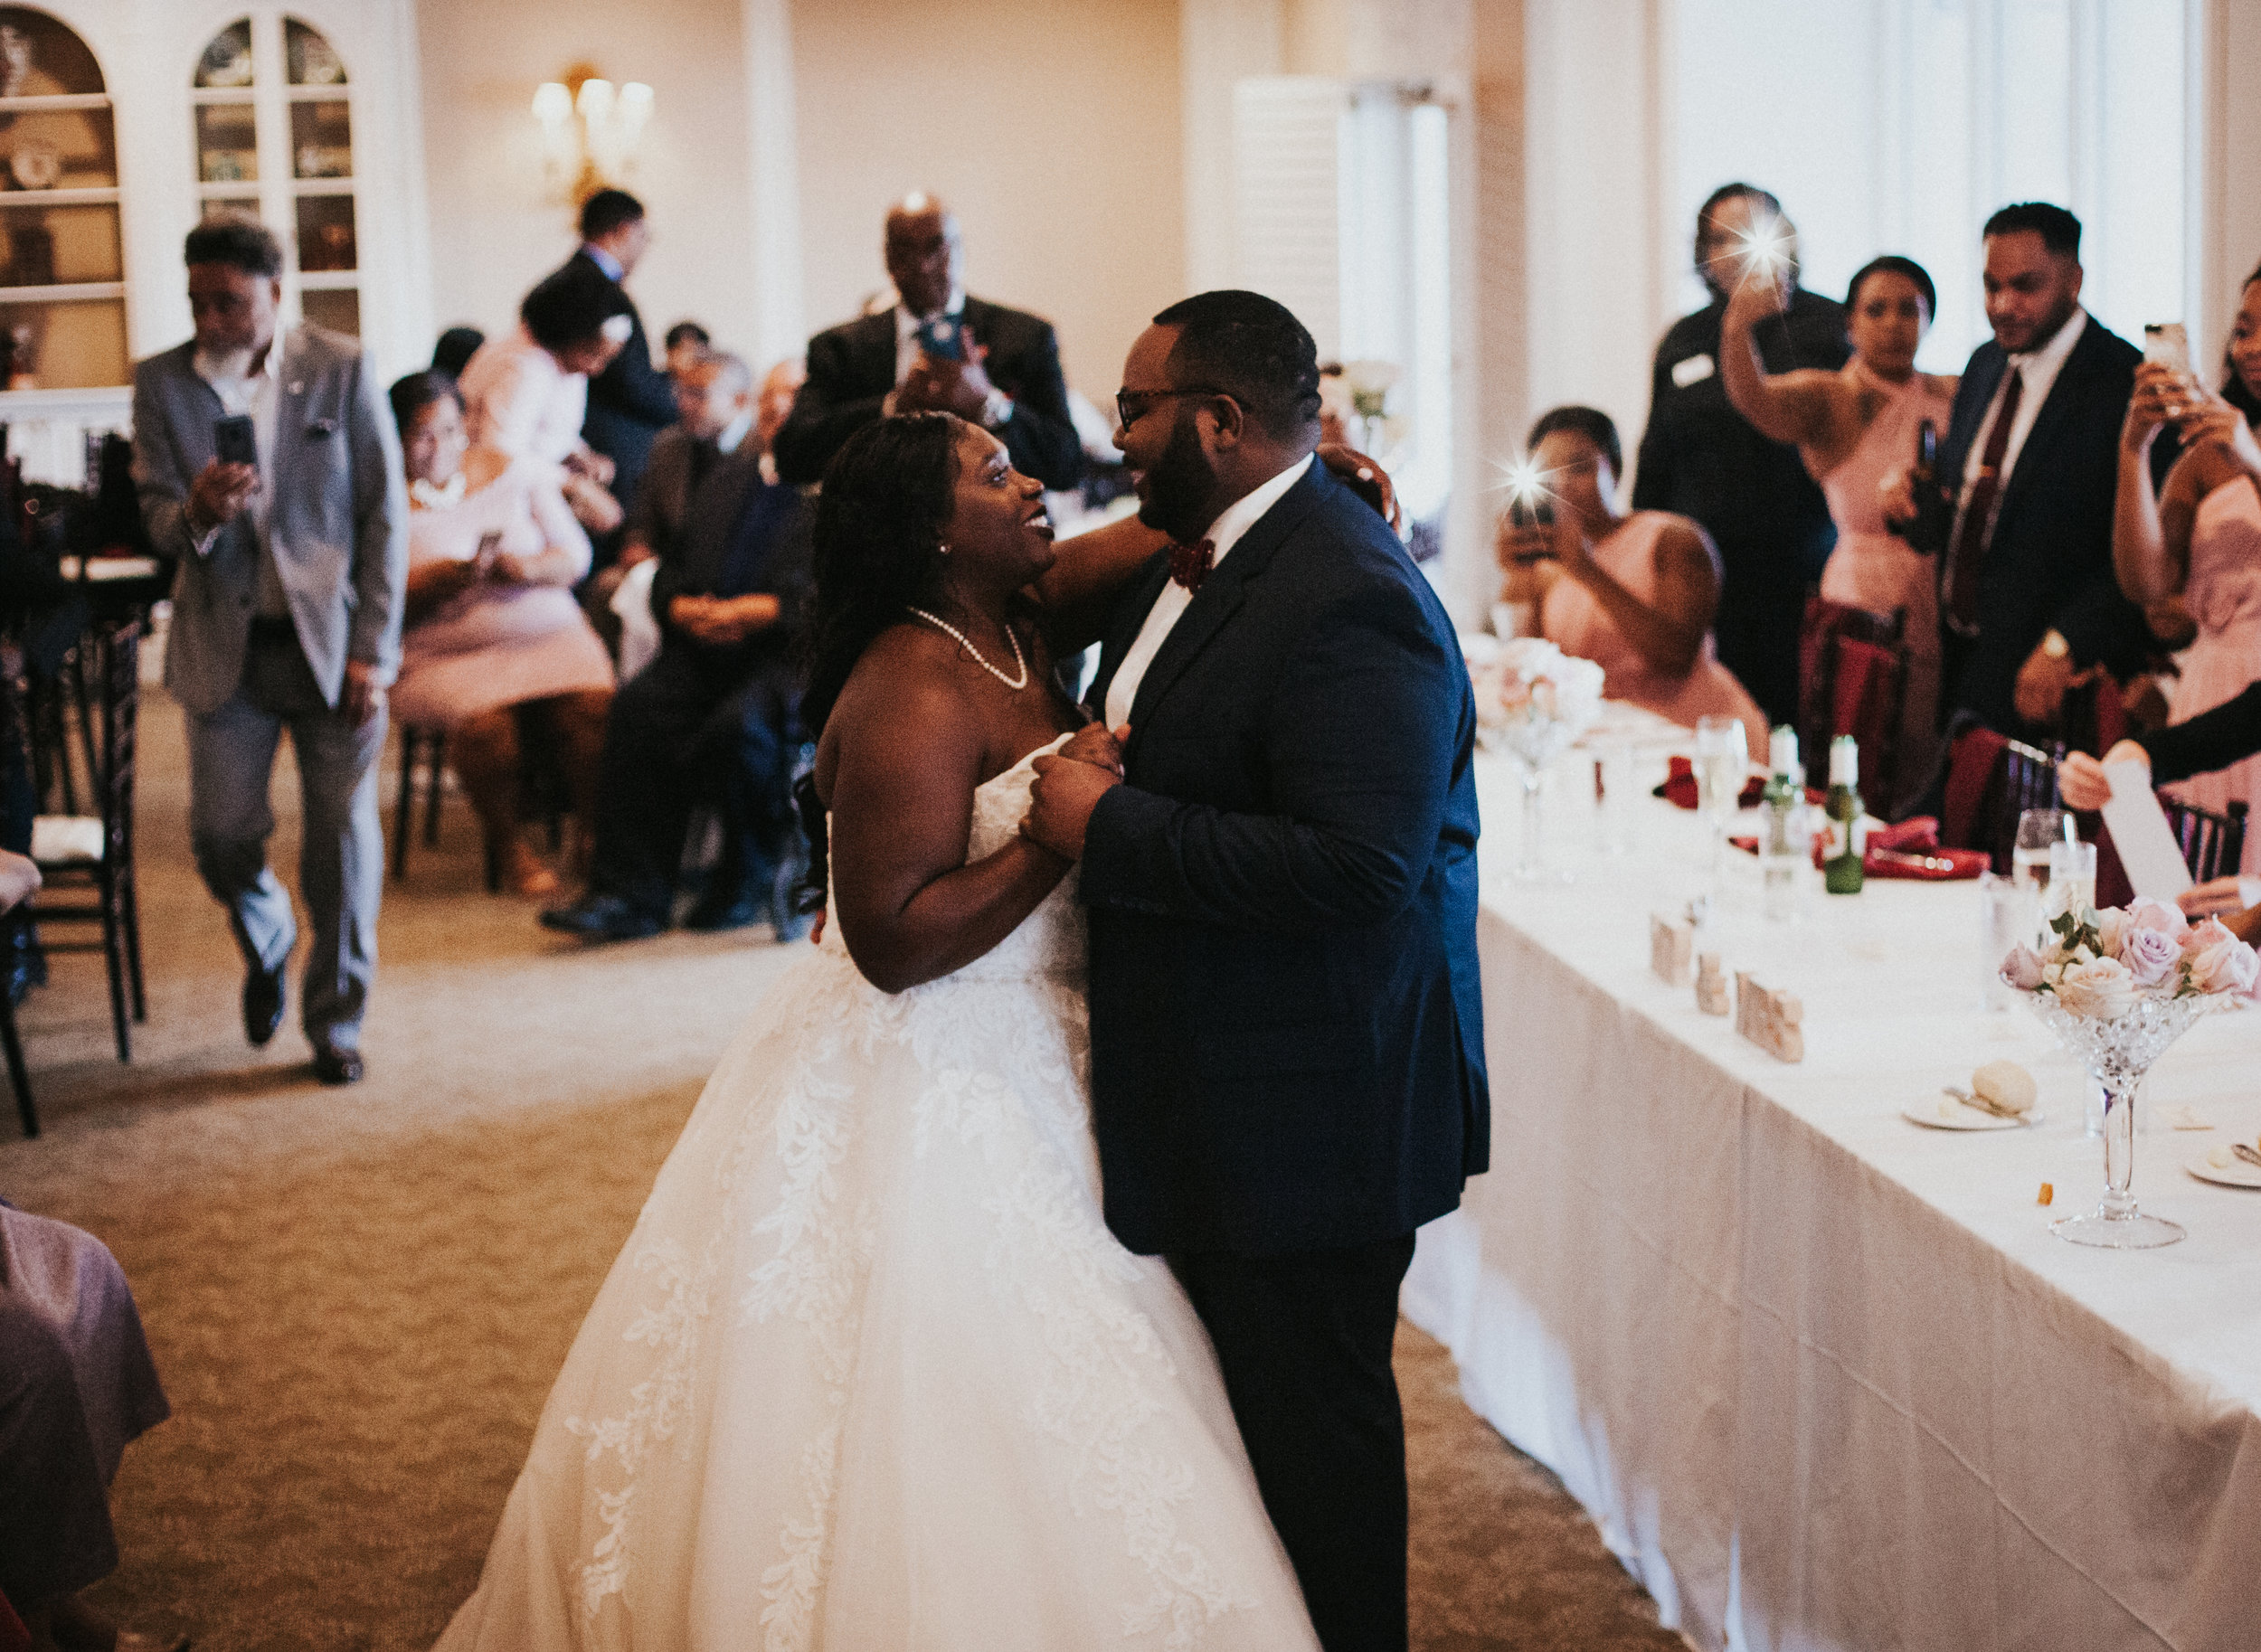  Hope Valley Country Club, Raleigh NC | Fall wedding | Wedding reception photos | First dance photos | Marina Rey Photography 